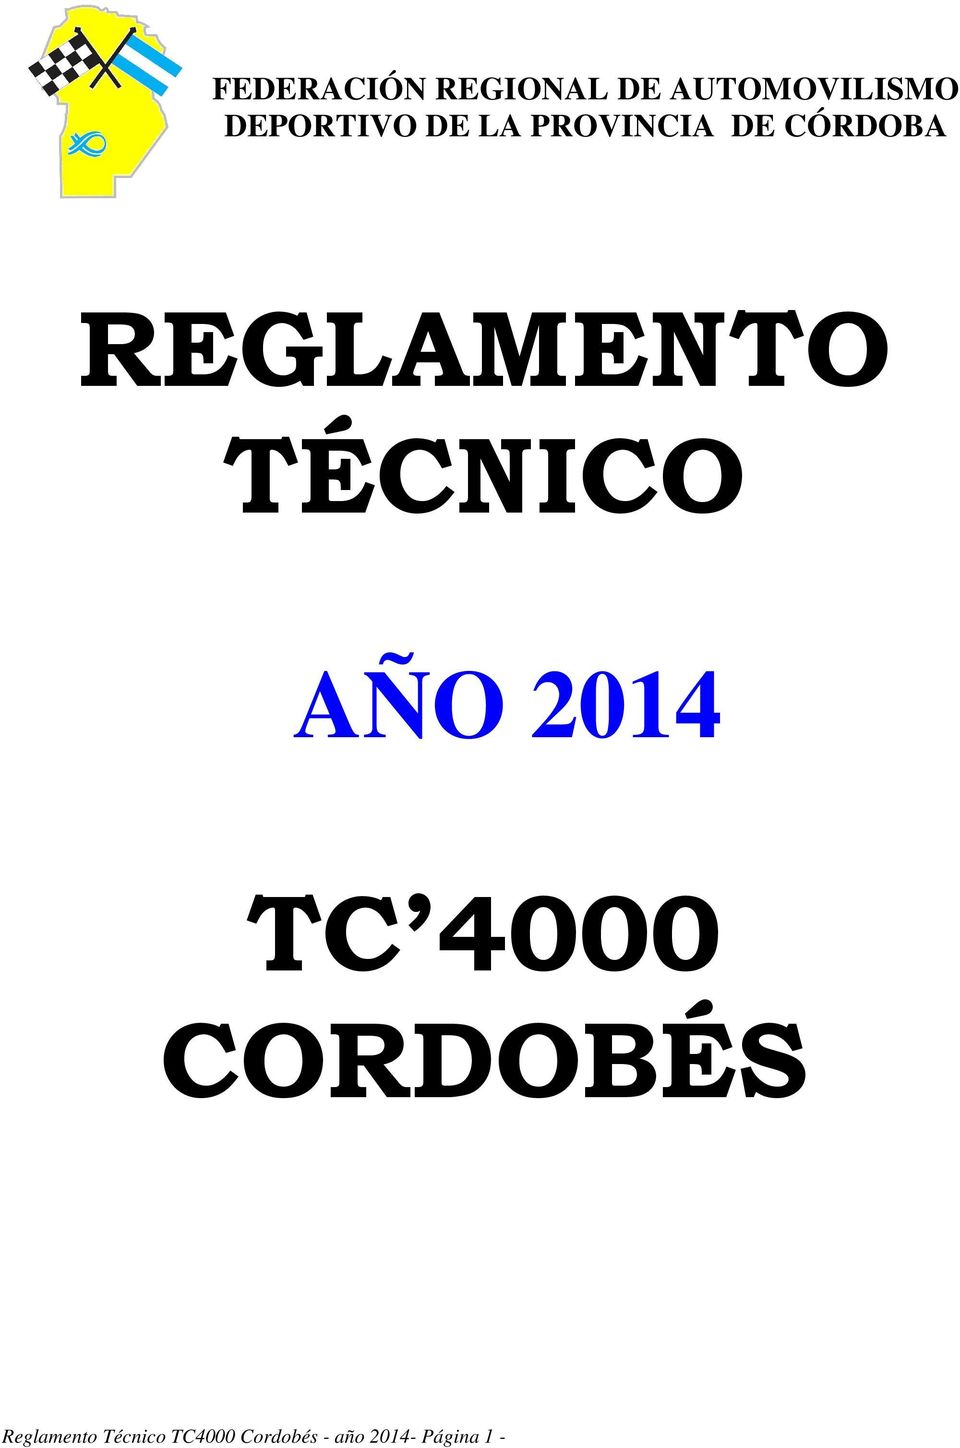 REGLAMENTO TÉCNICO AÑO 2014 TC 4000